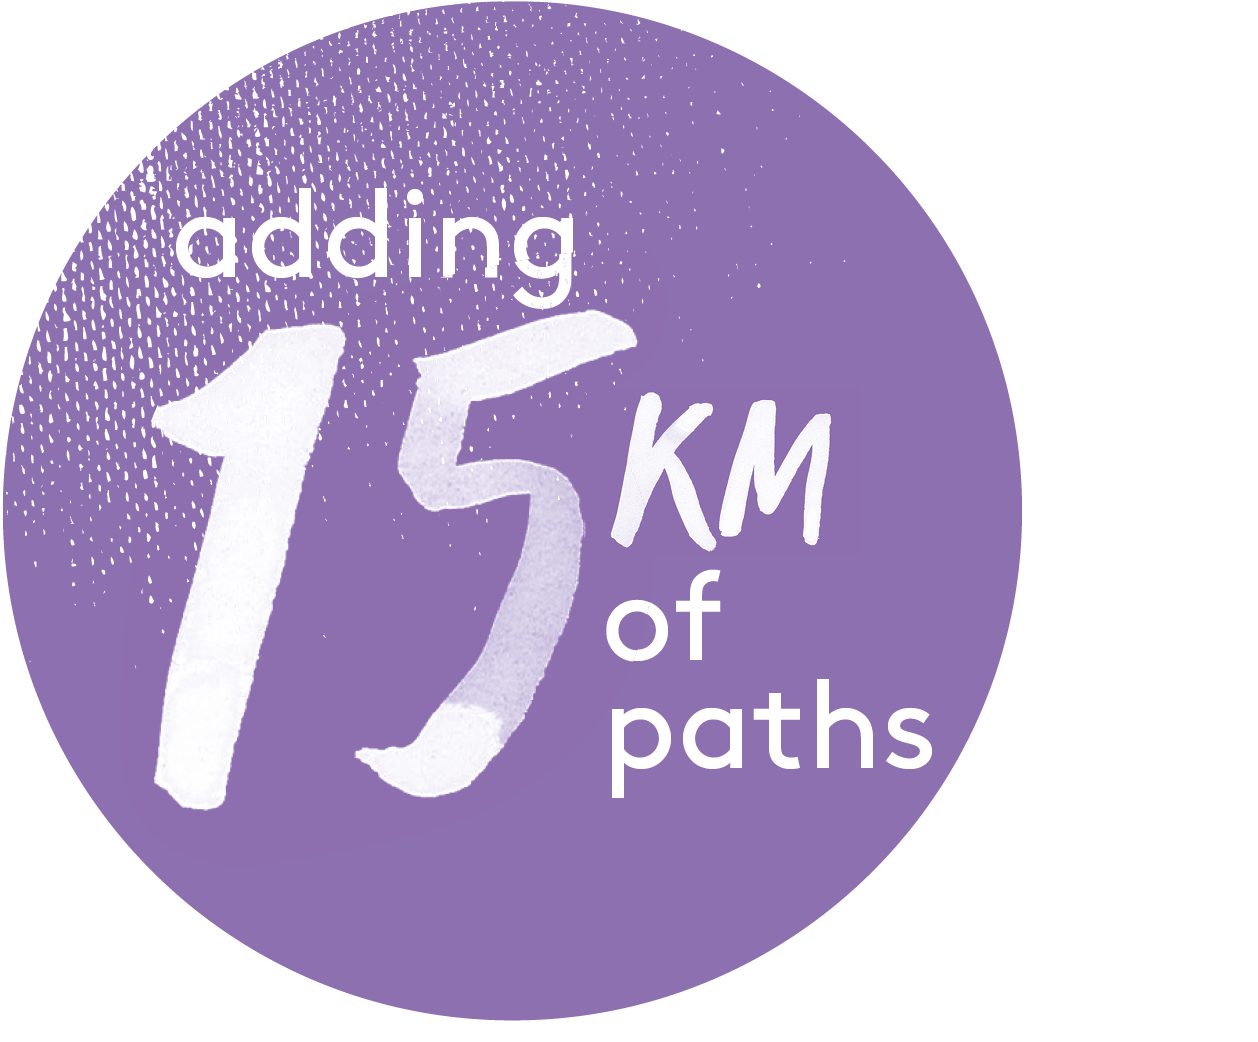 adding 15km of paths